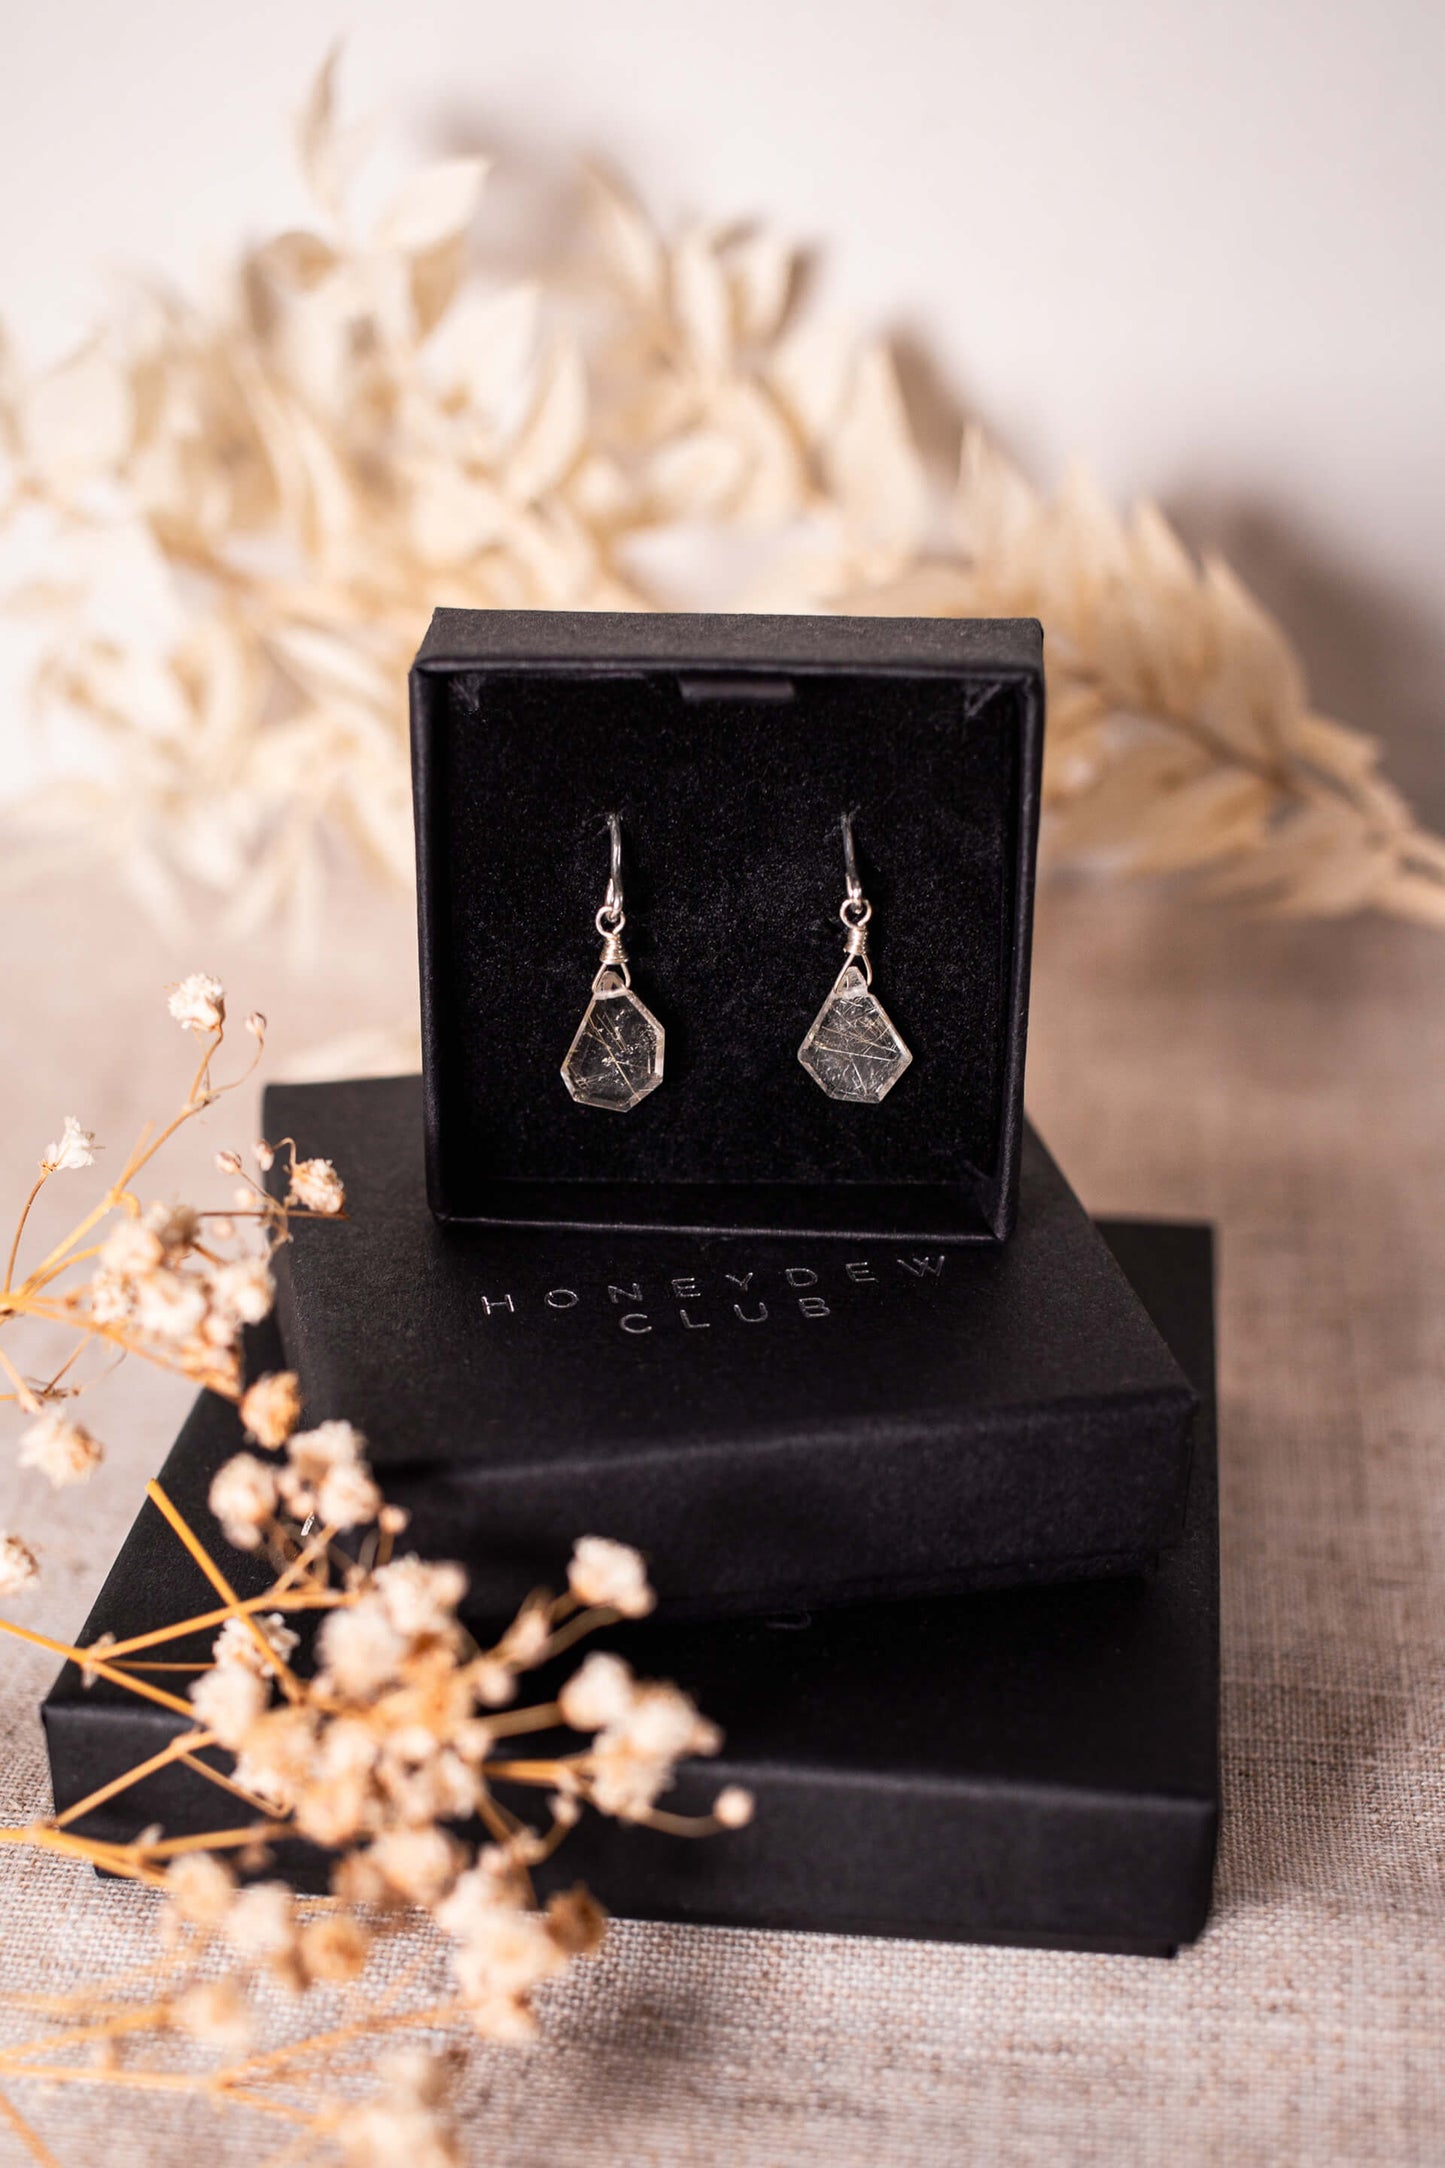 Asymmetric gemstones on sterling silver earrings in a black gift box